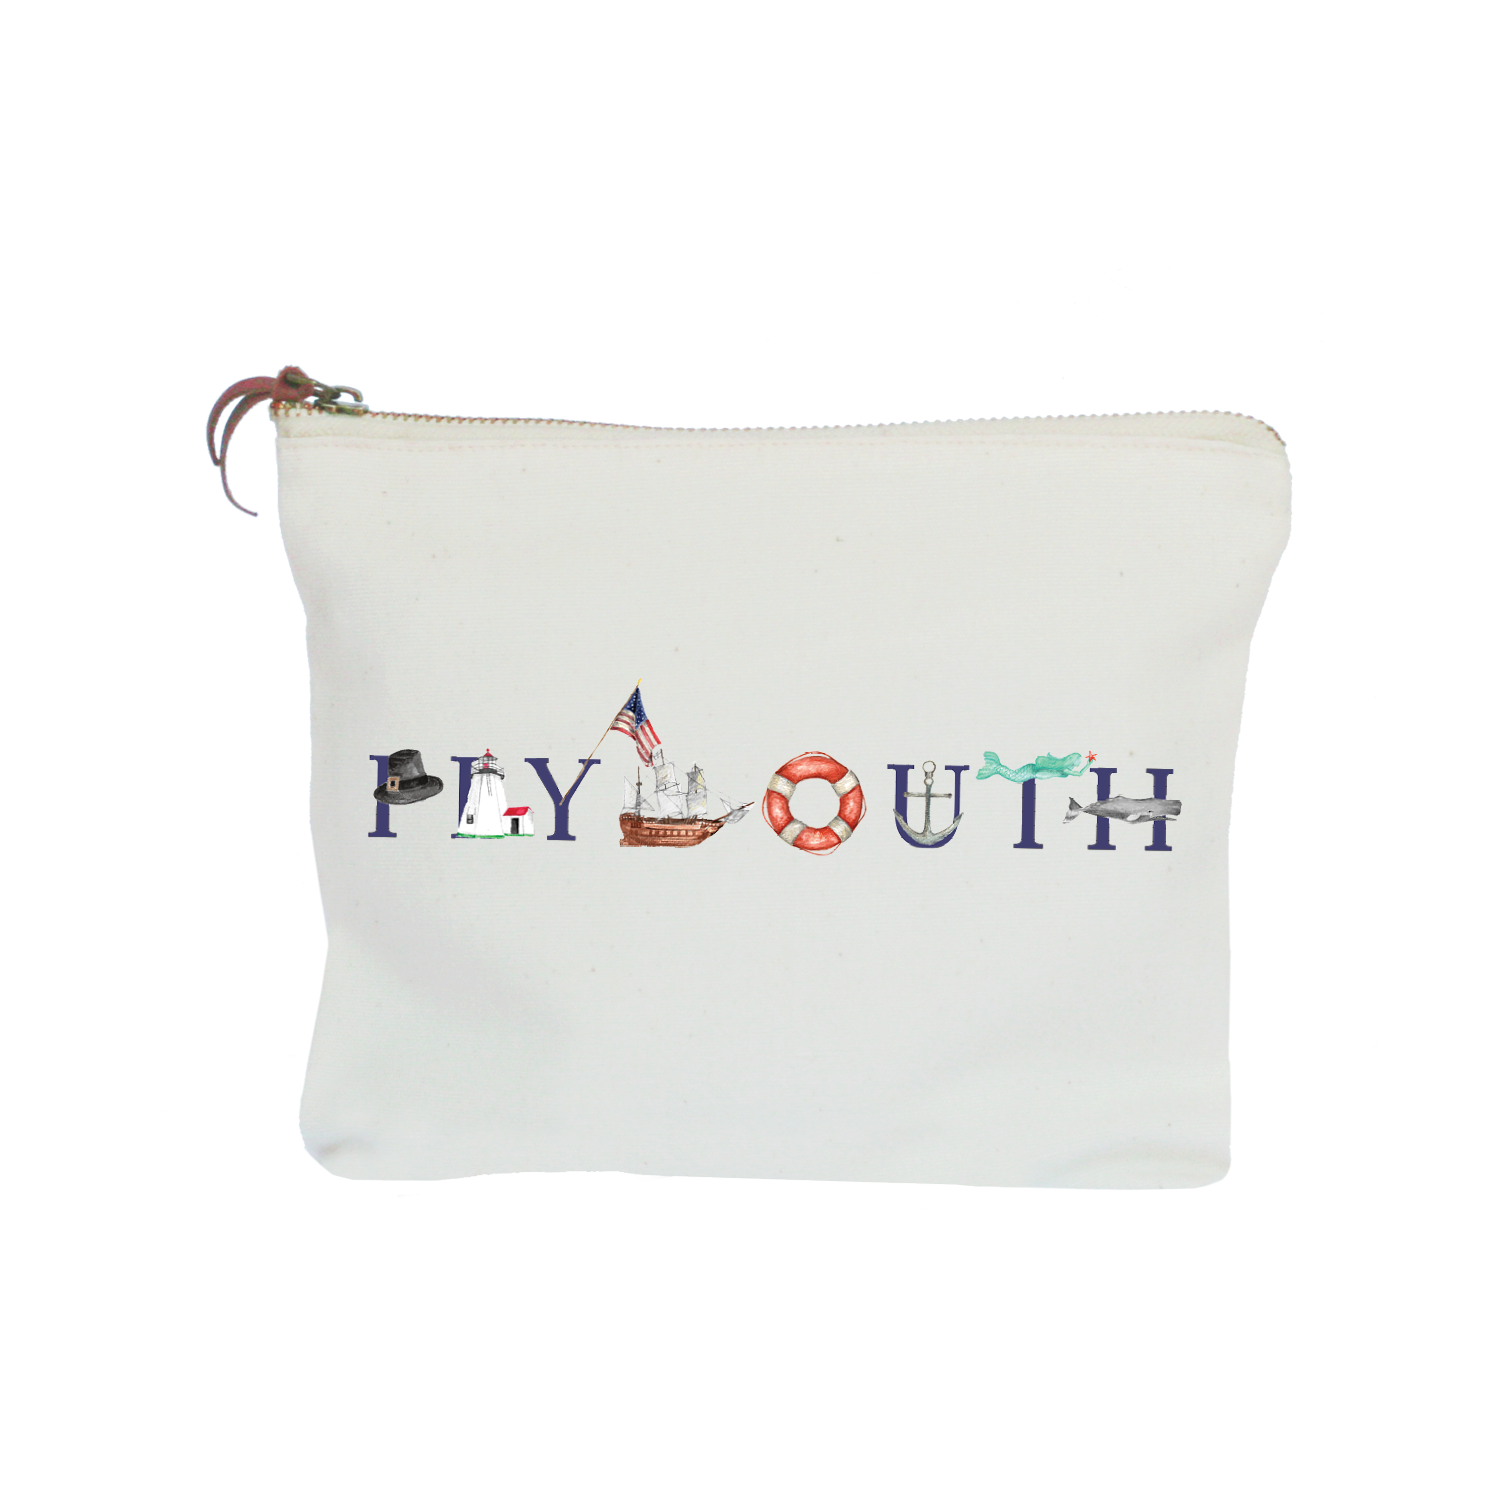 Plymouth zipper pouch